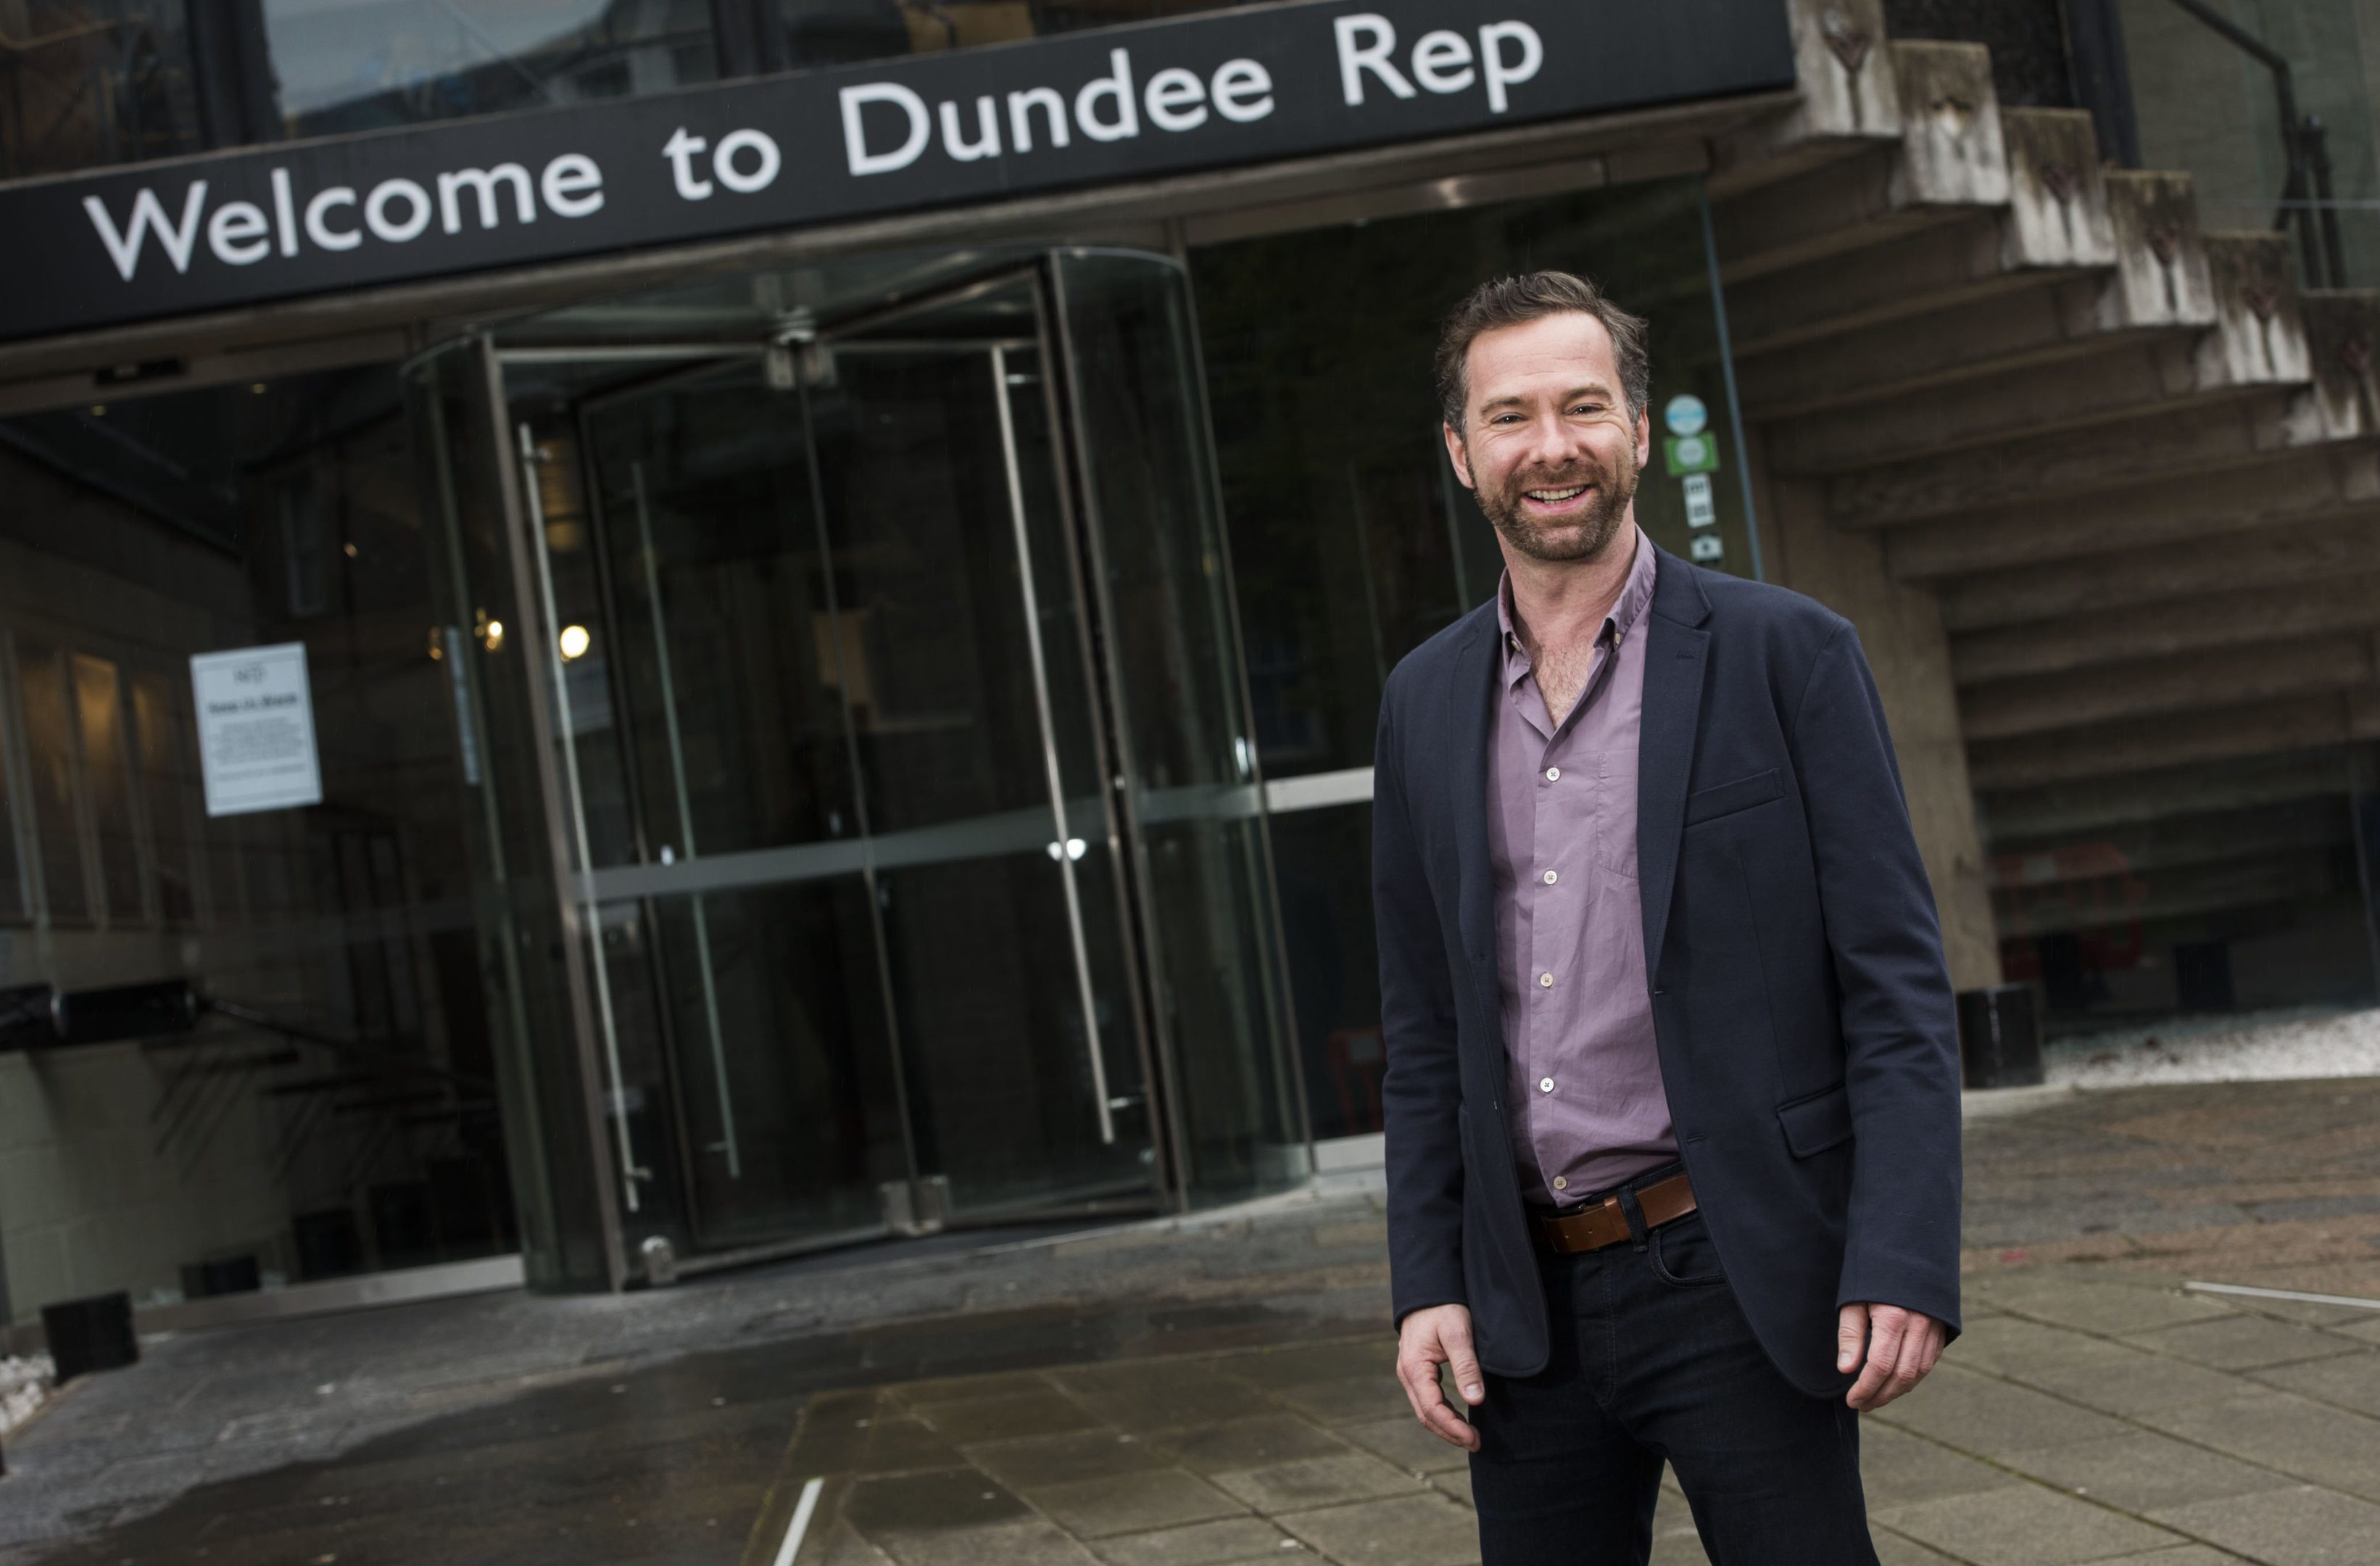 Andrew Panton, Artistic Director at Dundee Rep